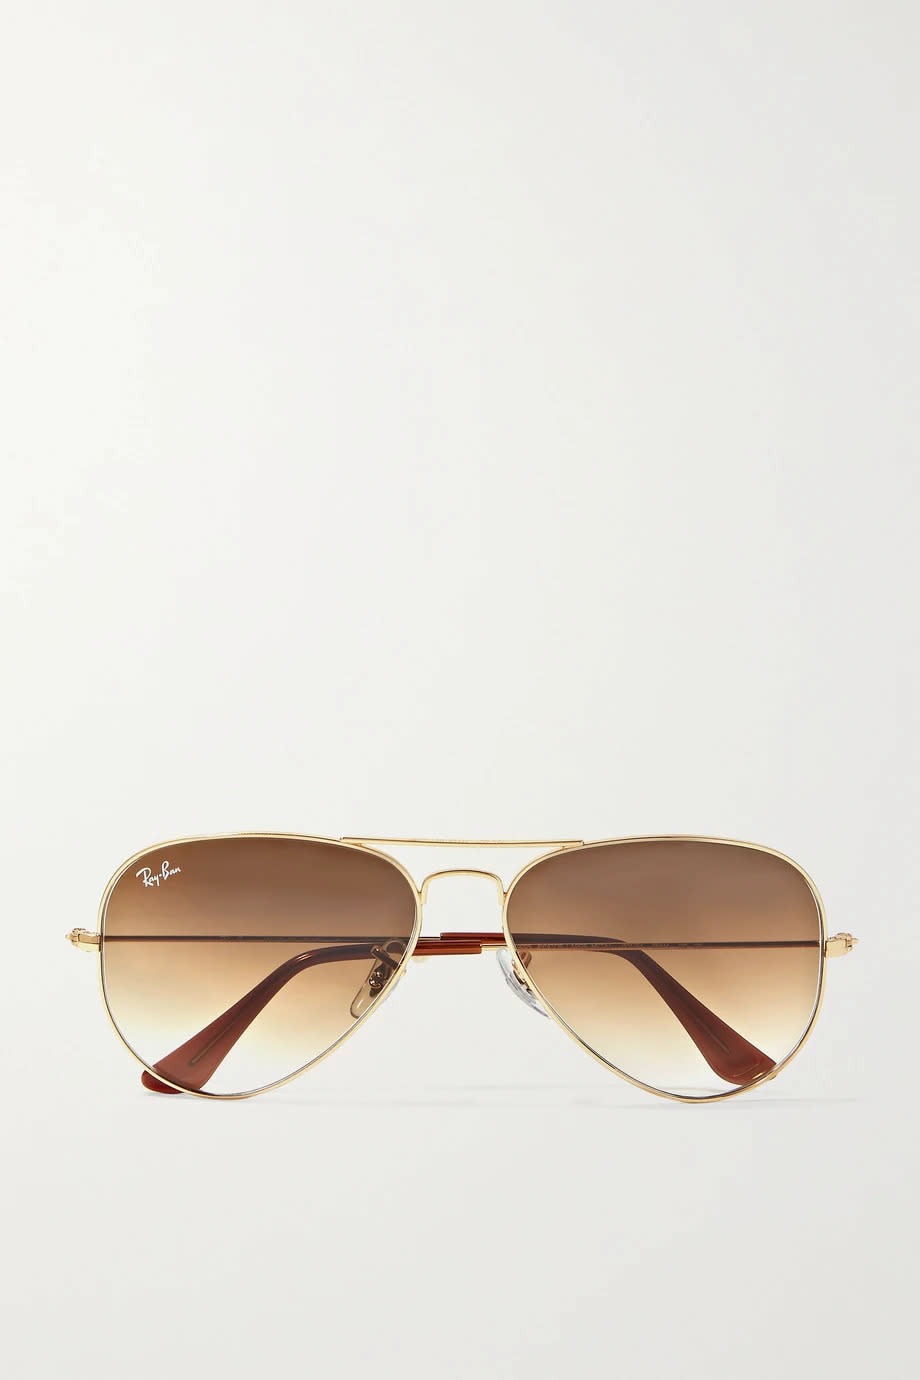 RAY-BAN Aviator gold-tone sunglasses